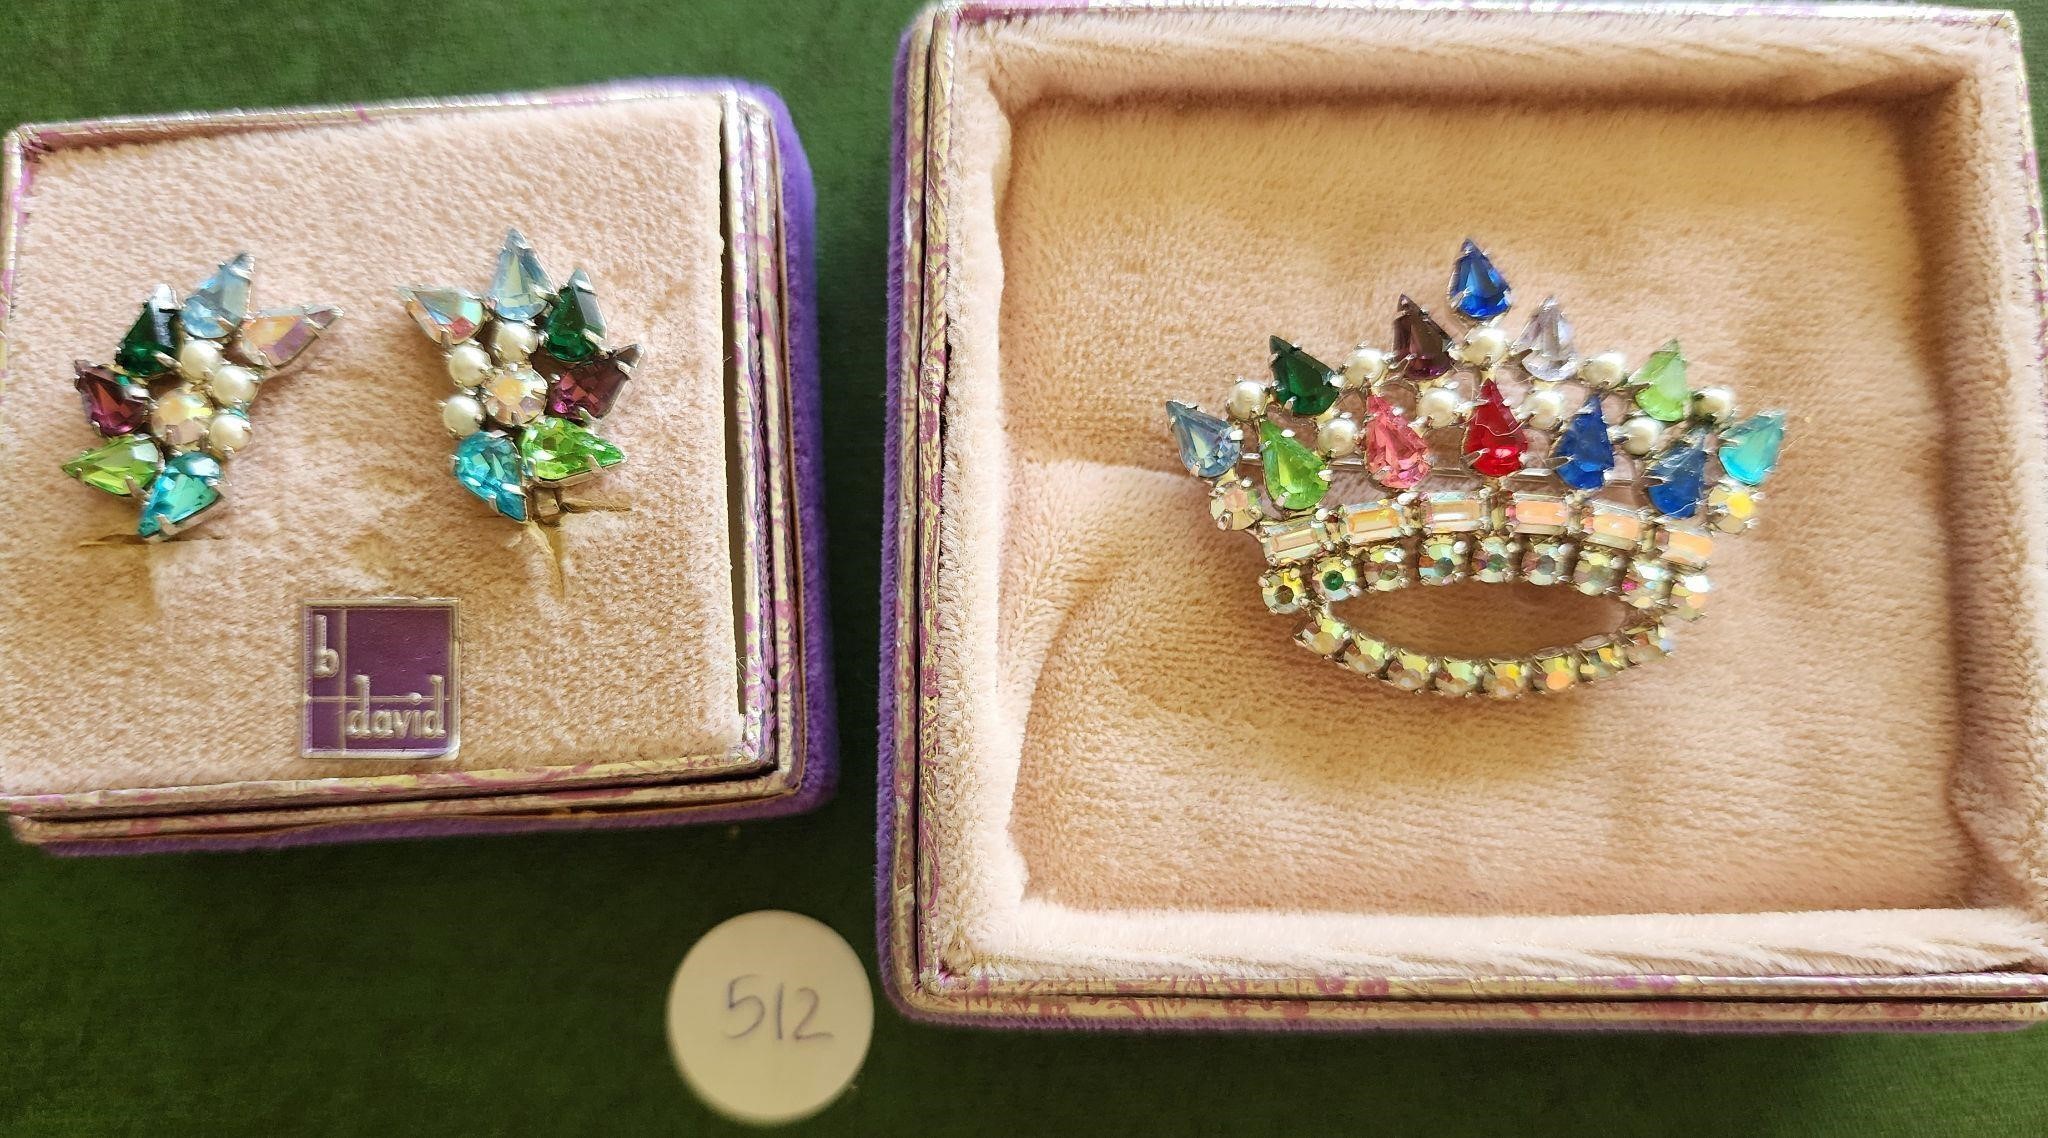 B.David Crown Pin, Earrings Rhinestones